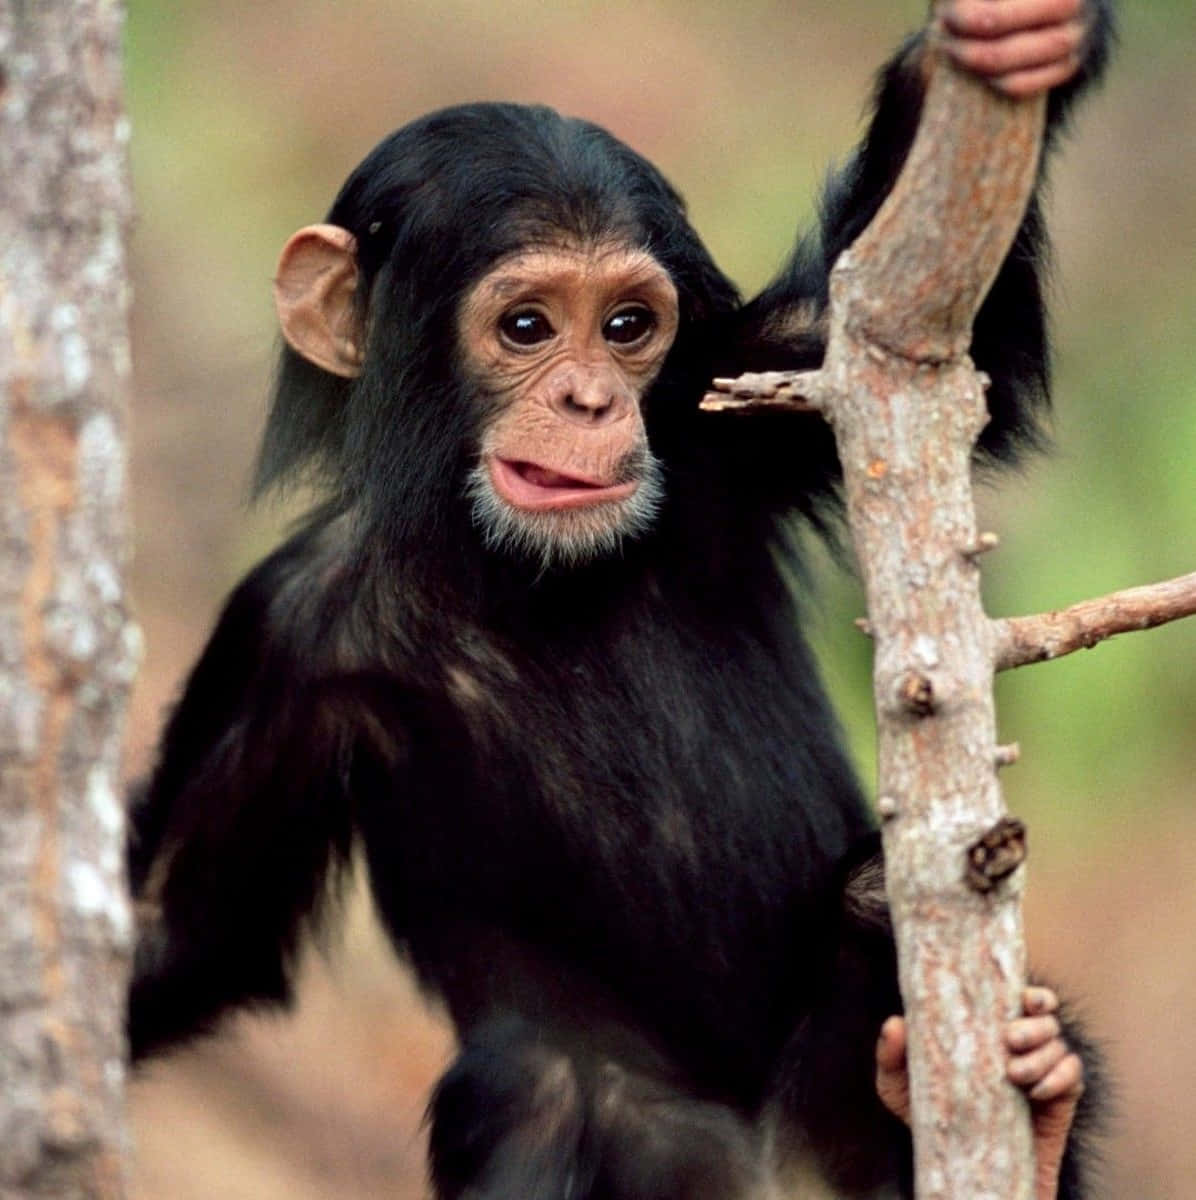 A curious chimpanzee in its natural habitat.